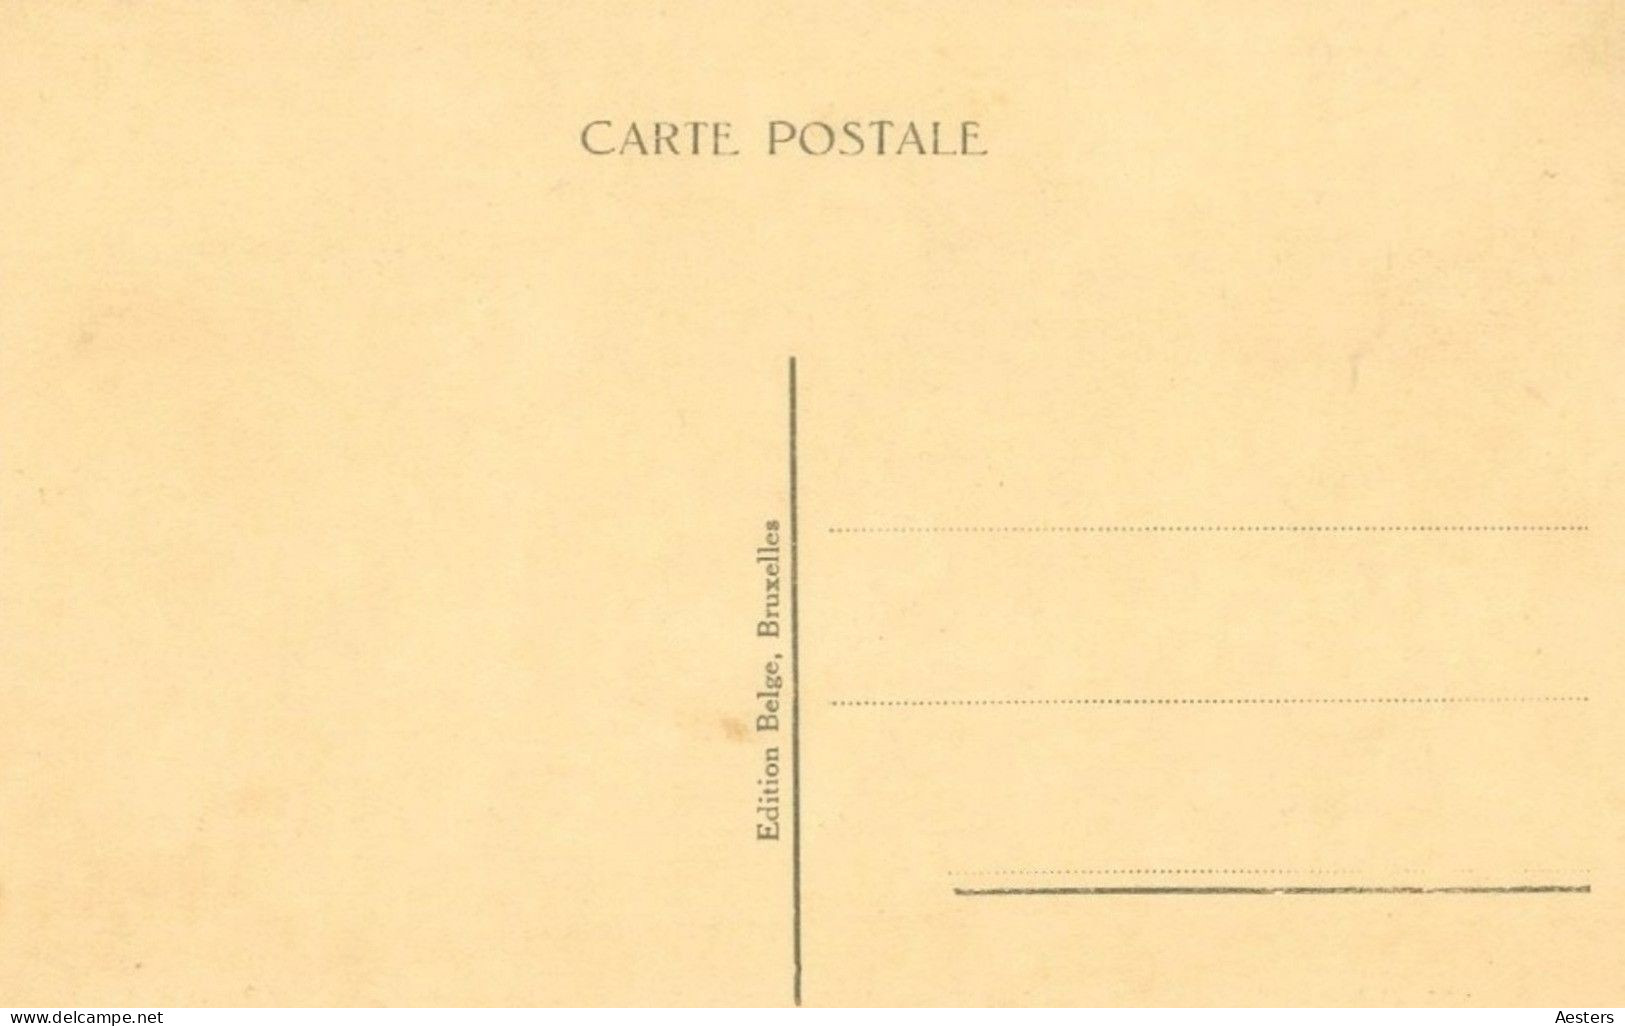 Waals-Brabant; Dongelberg, 12 Cartes Postales différentes - non voyagé. (24 scans)